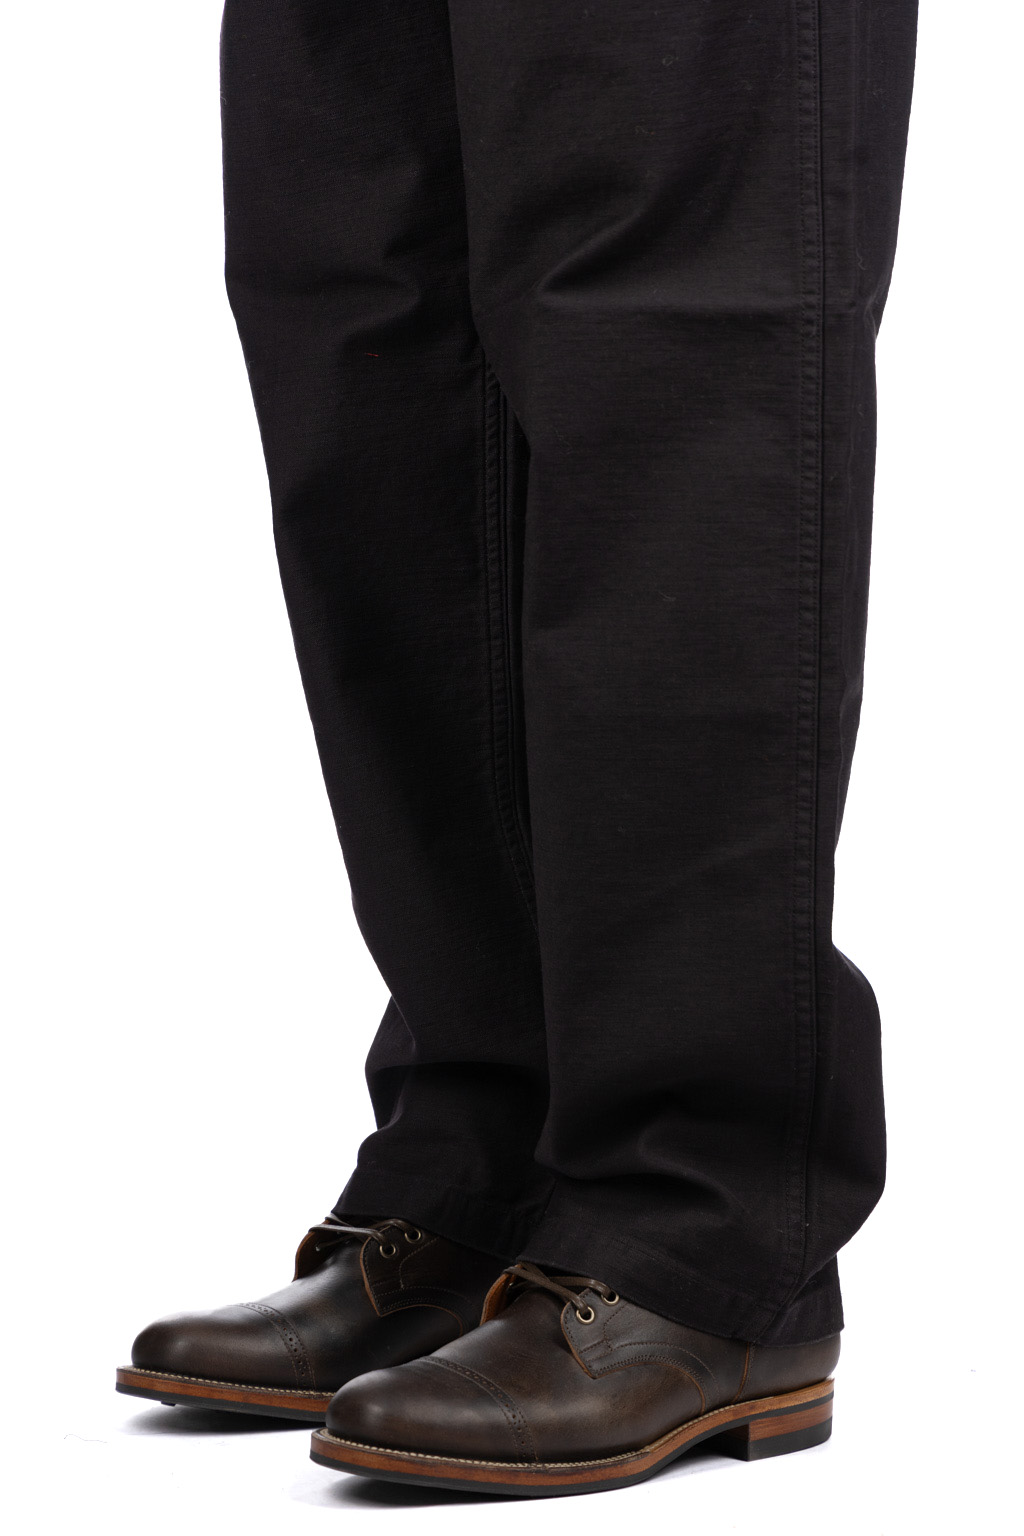 US Army Fatigue Pants Regular Fit Black